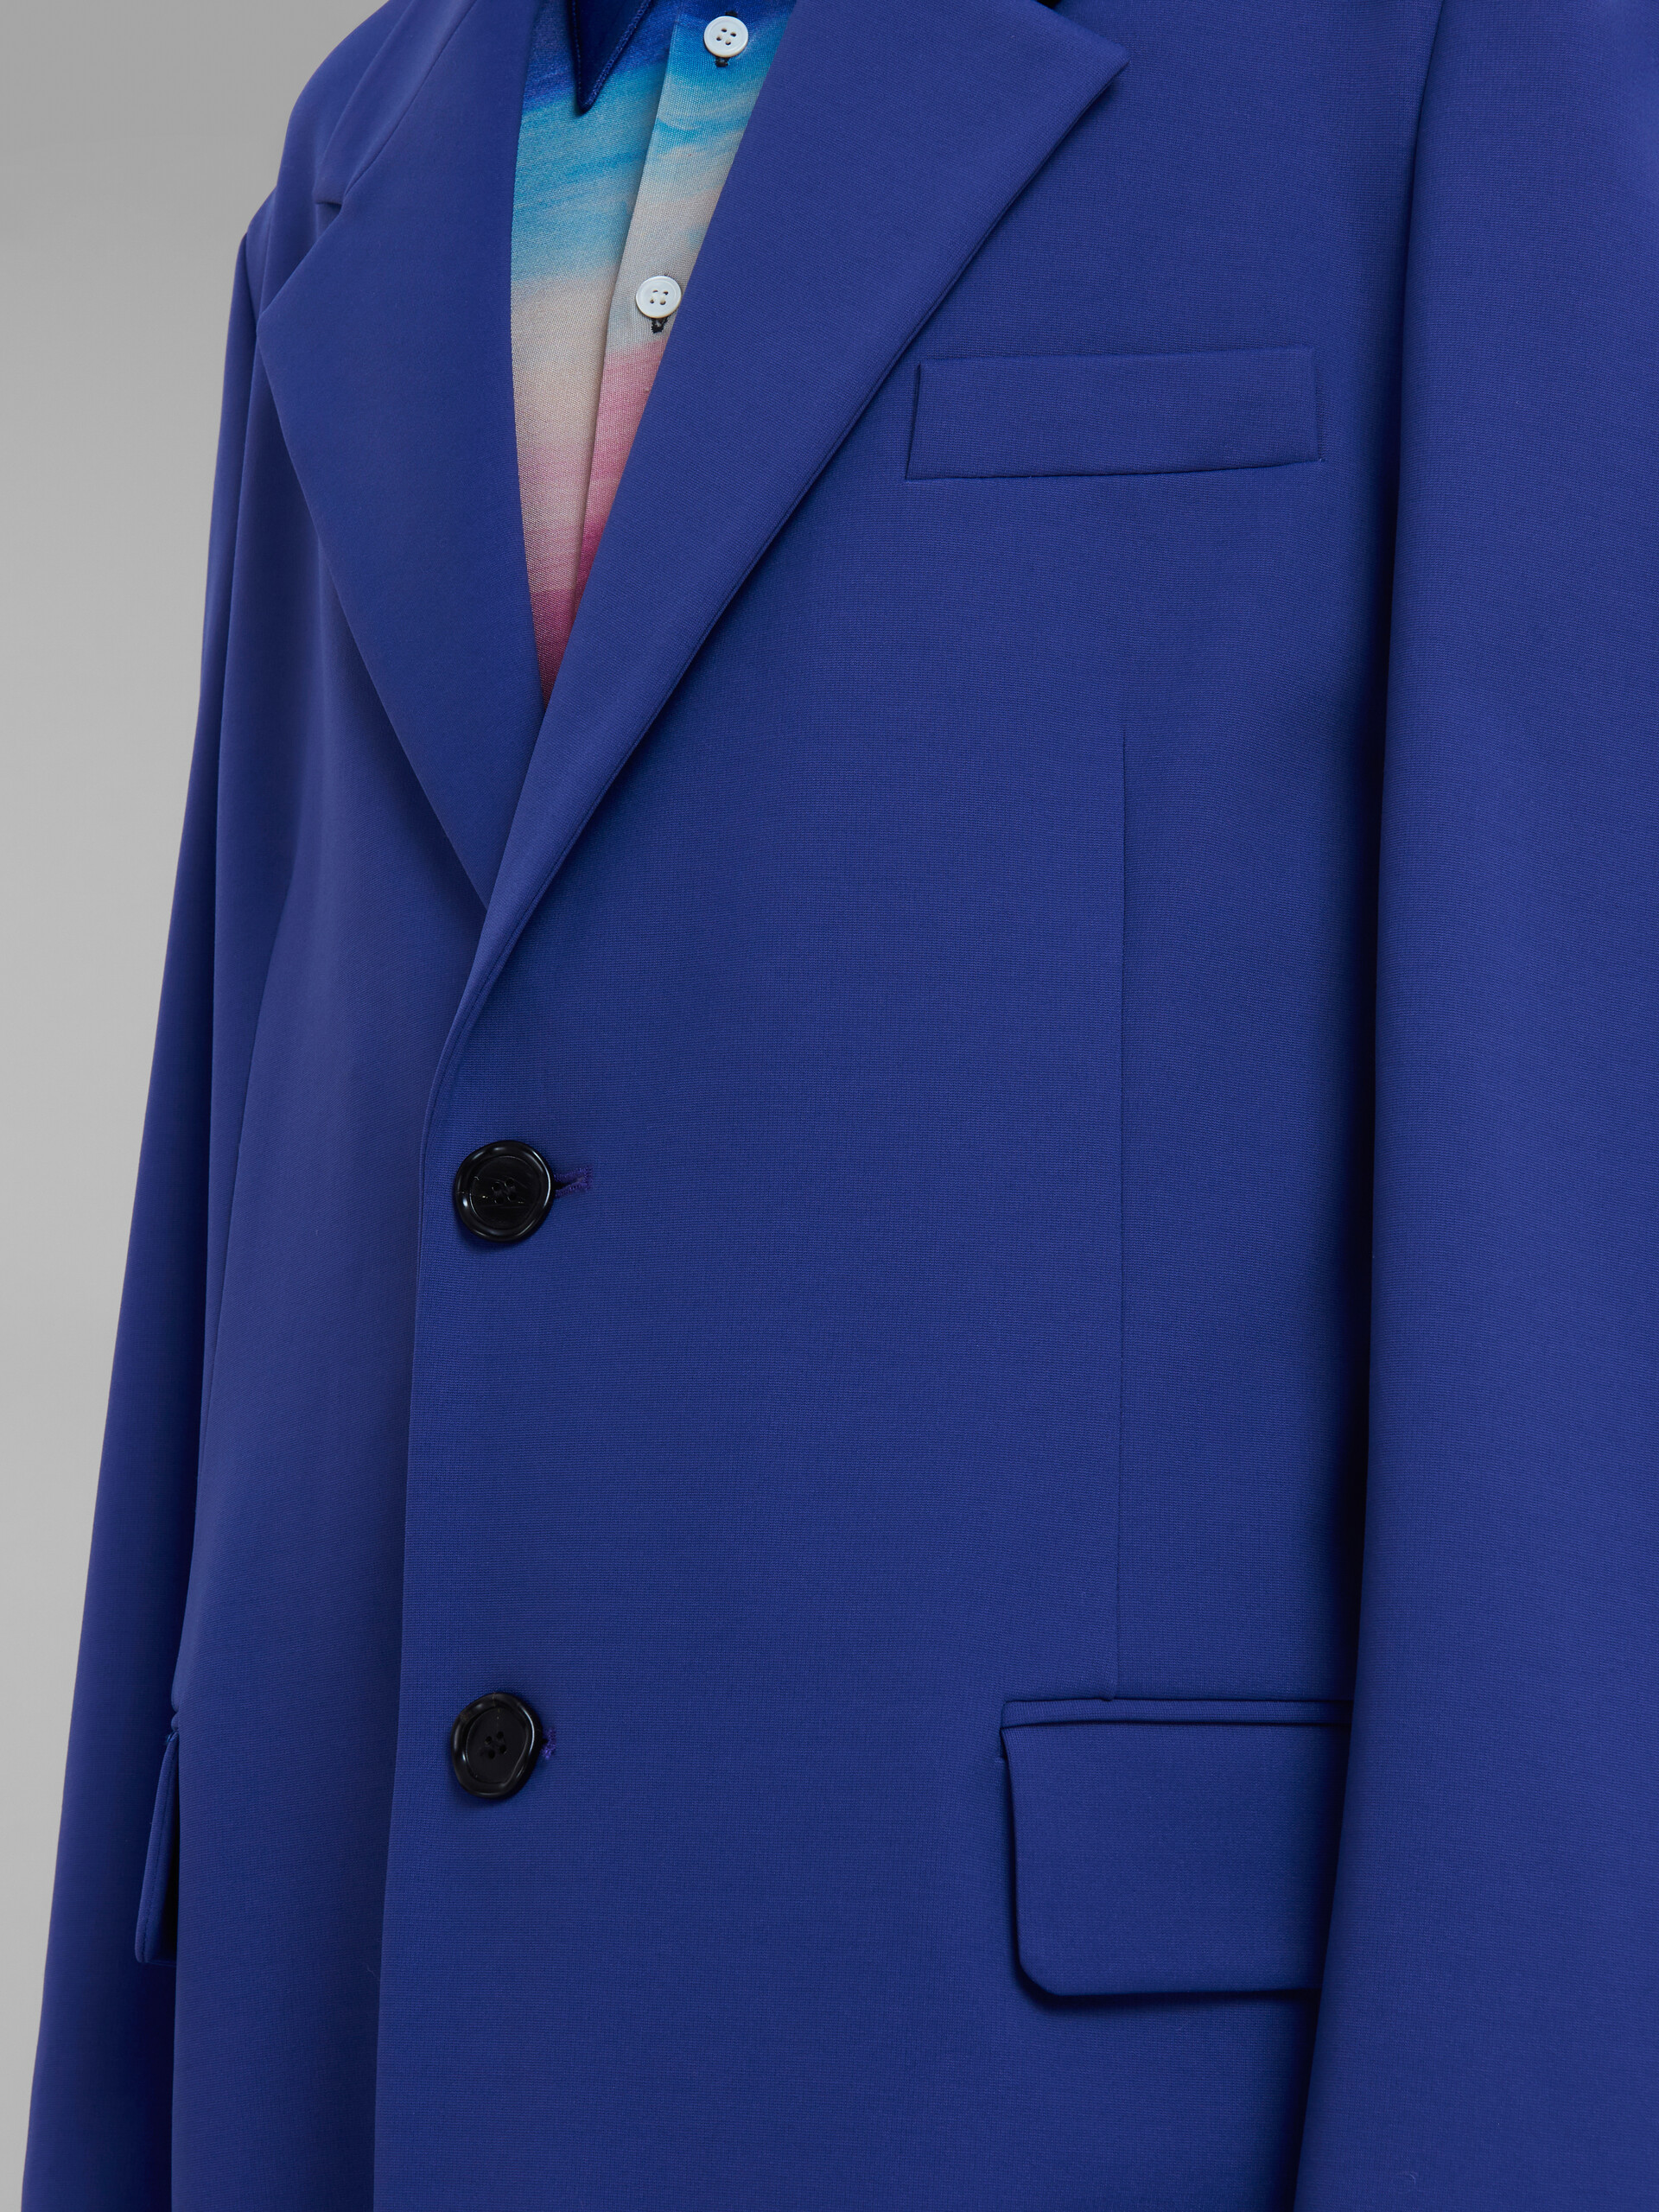 Purple single-breasted jersey coat - Coat - Image 5